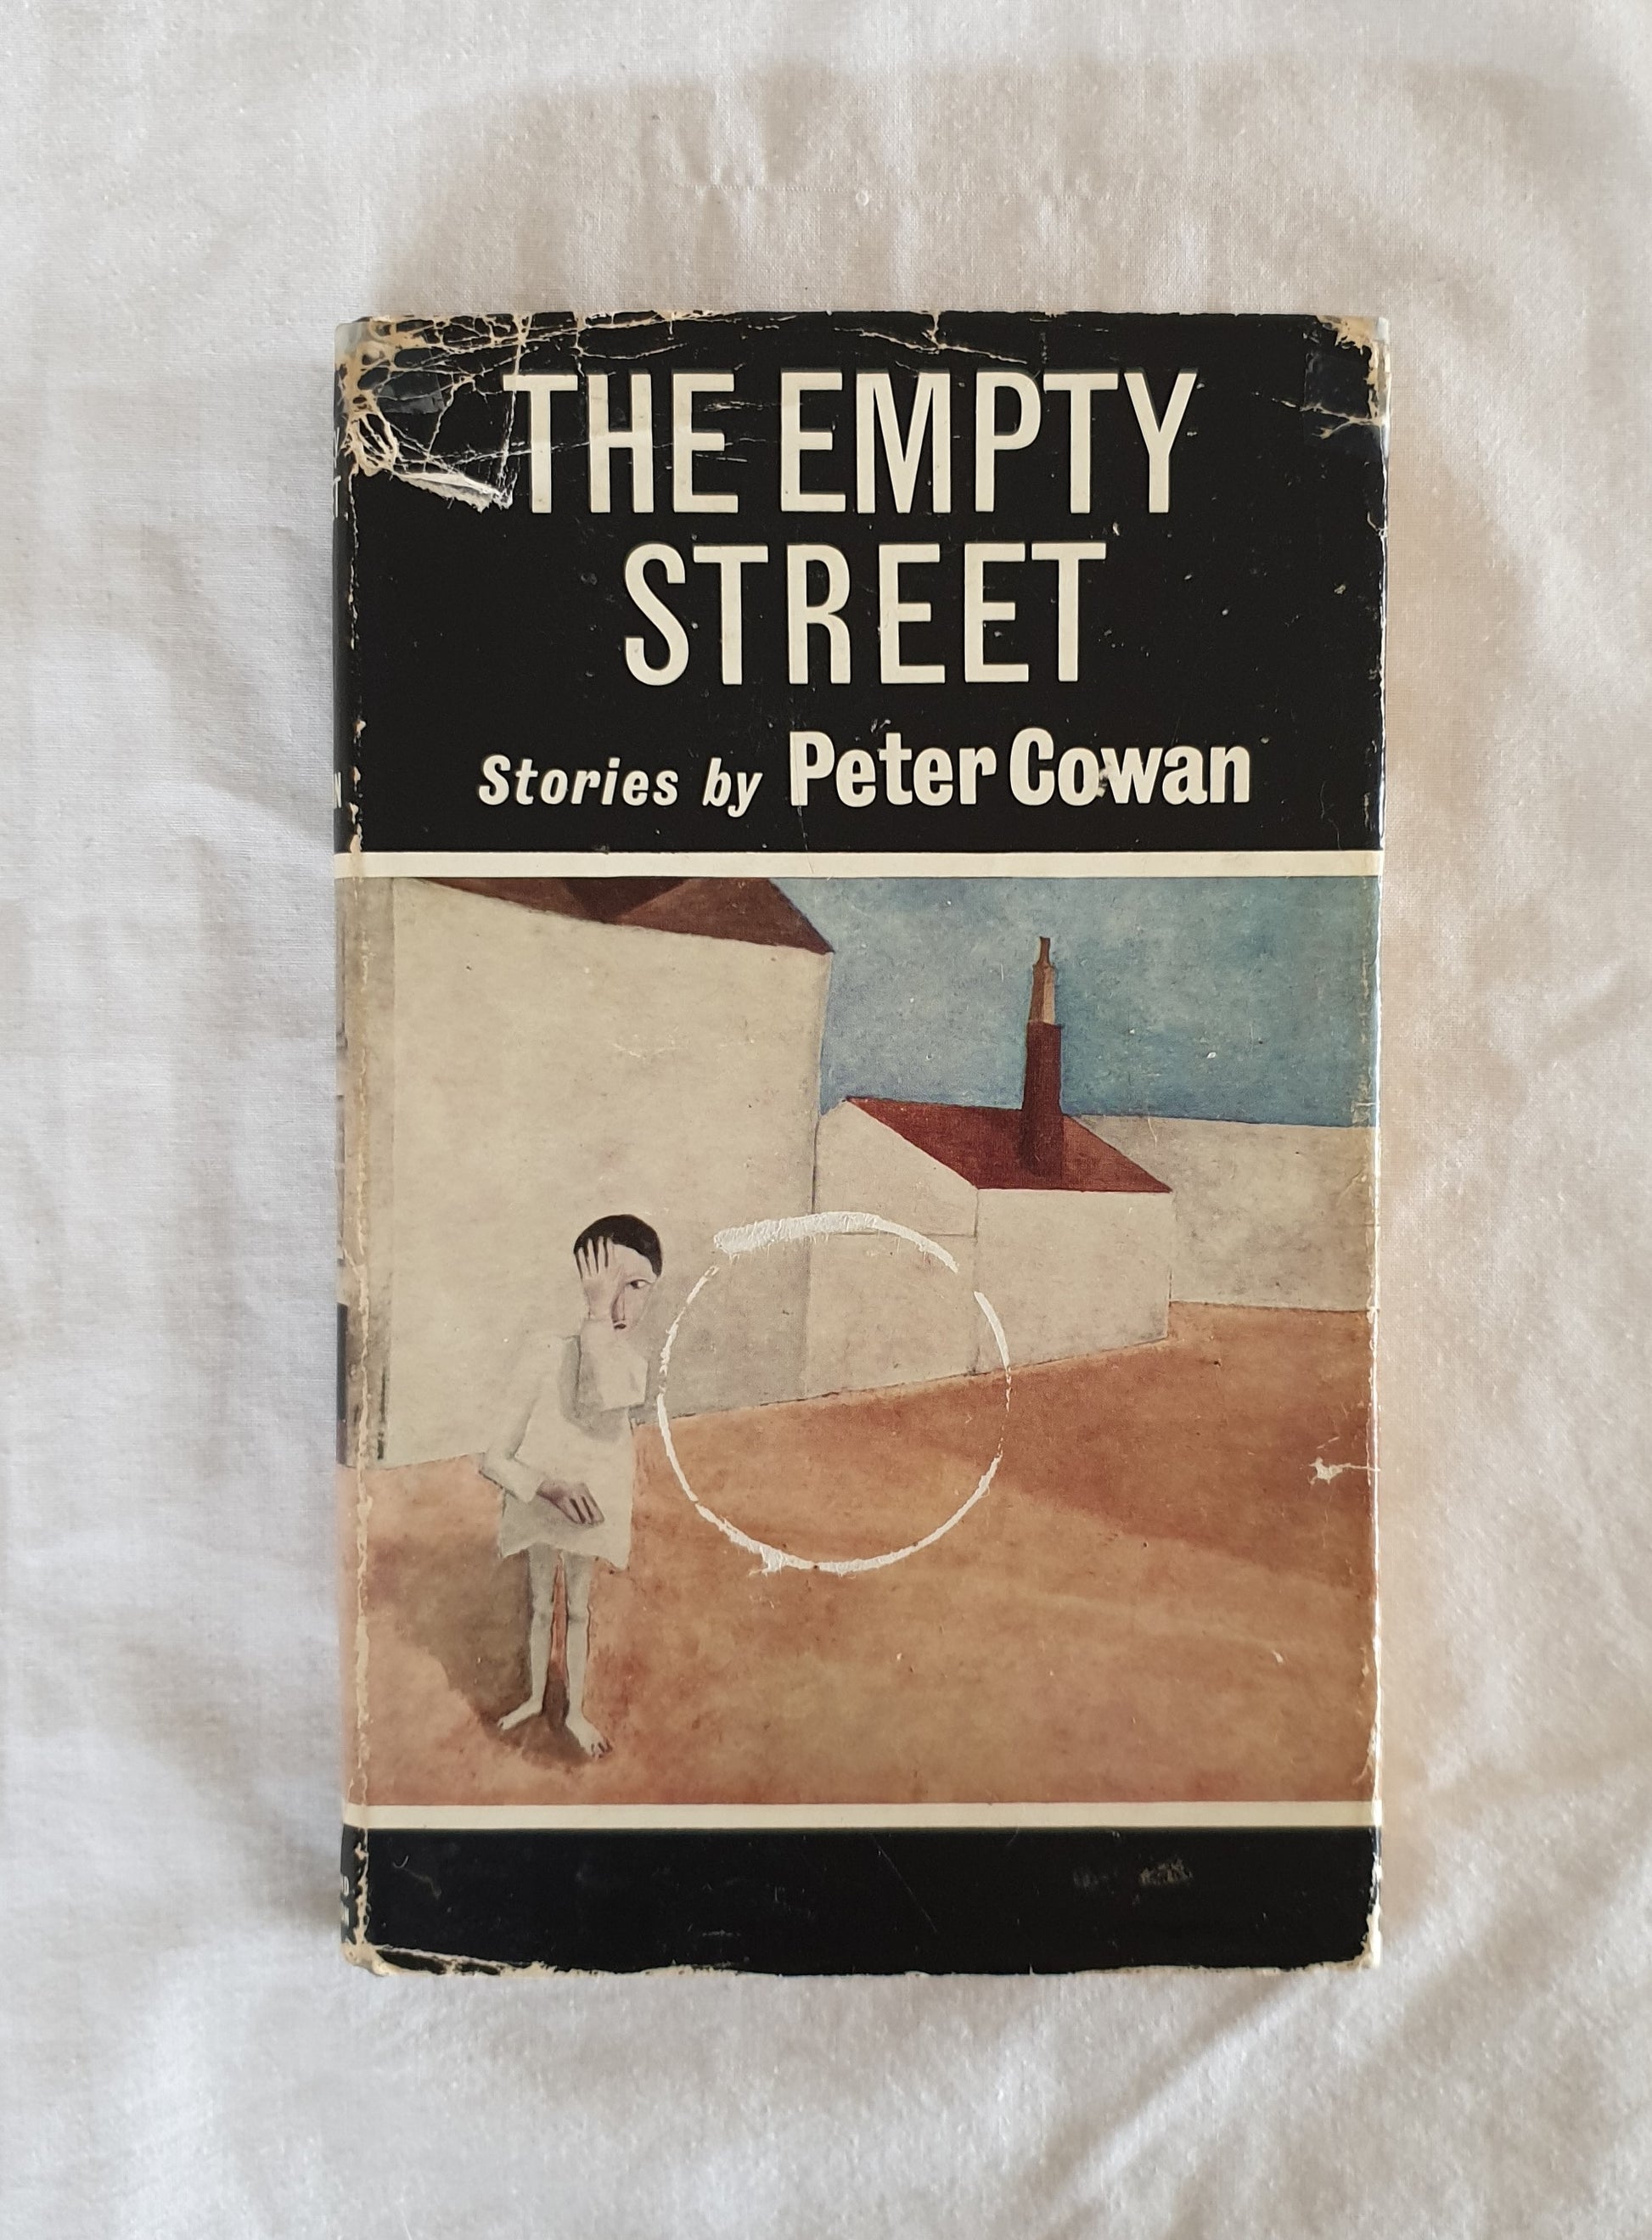 The Empty Street by Peter Cowan